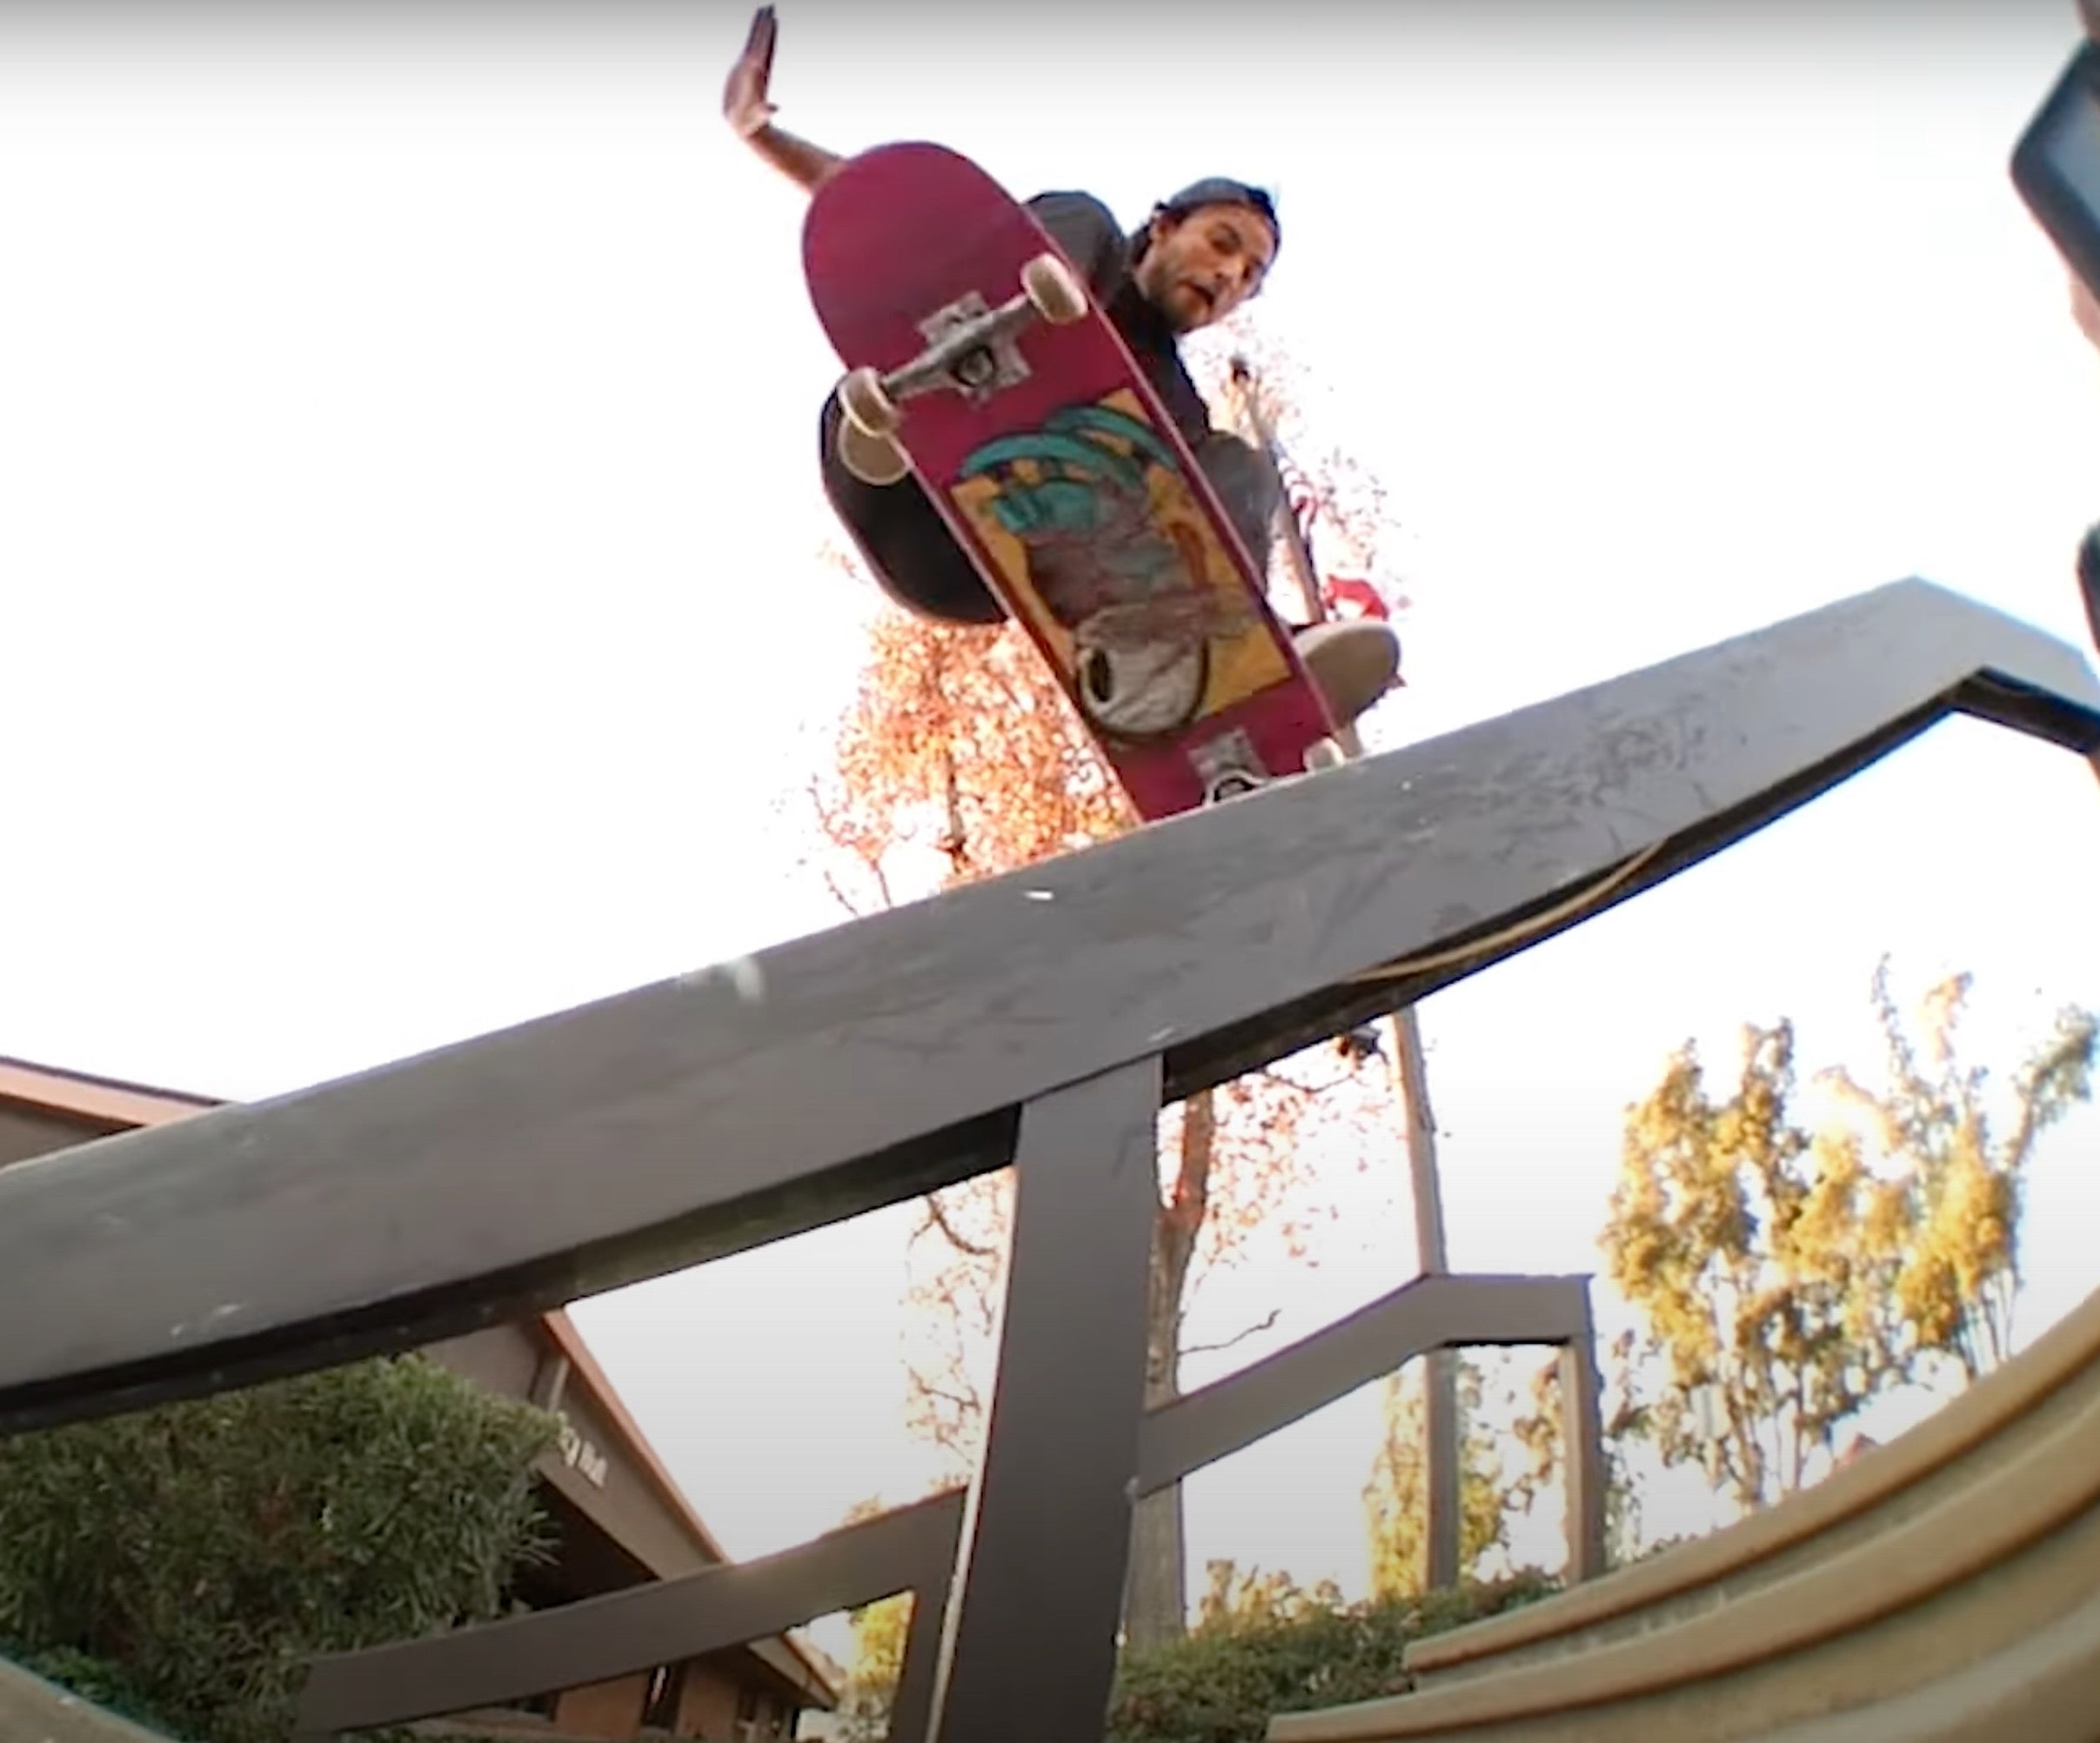 Micky Papa | "SIDE HUSTLE" Part  King Skateboard [Video]